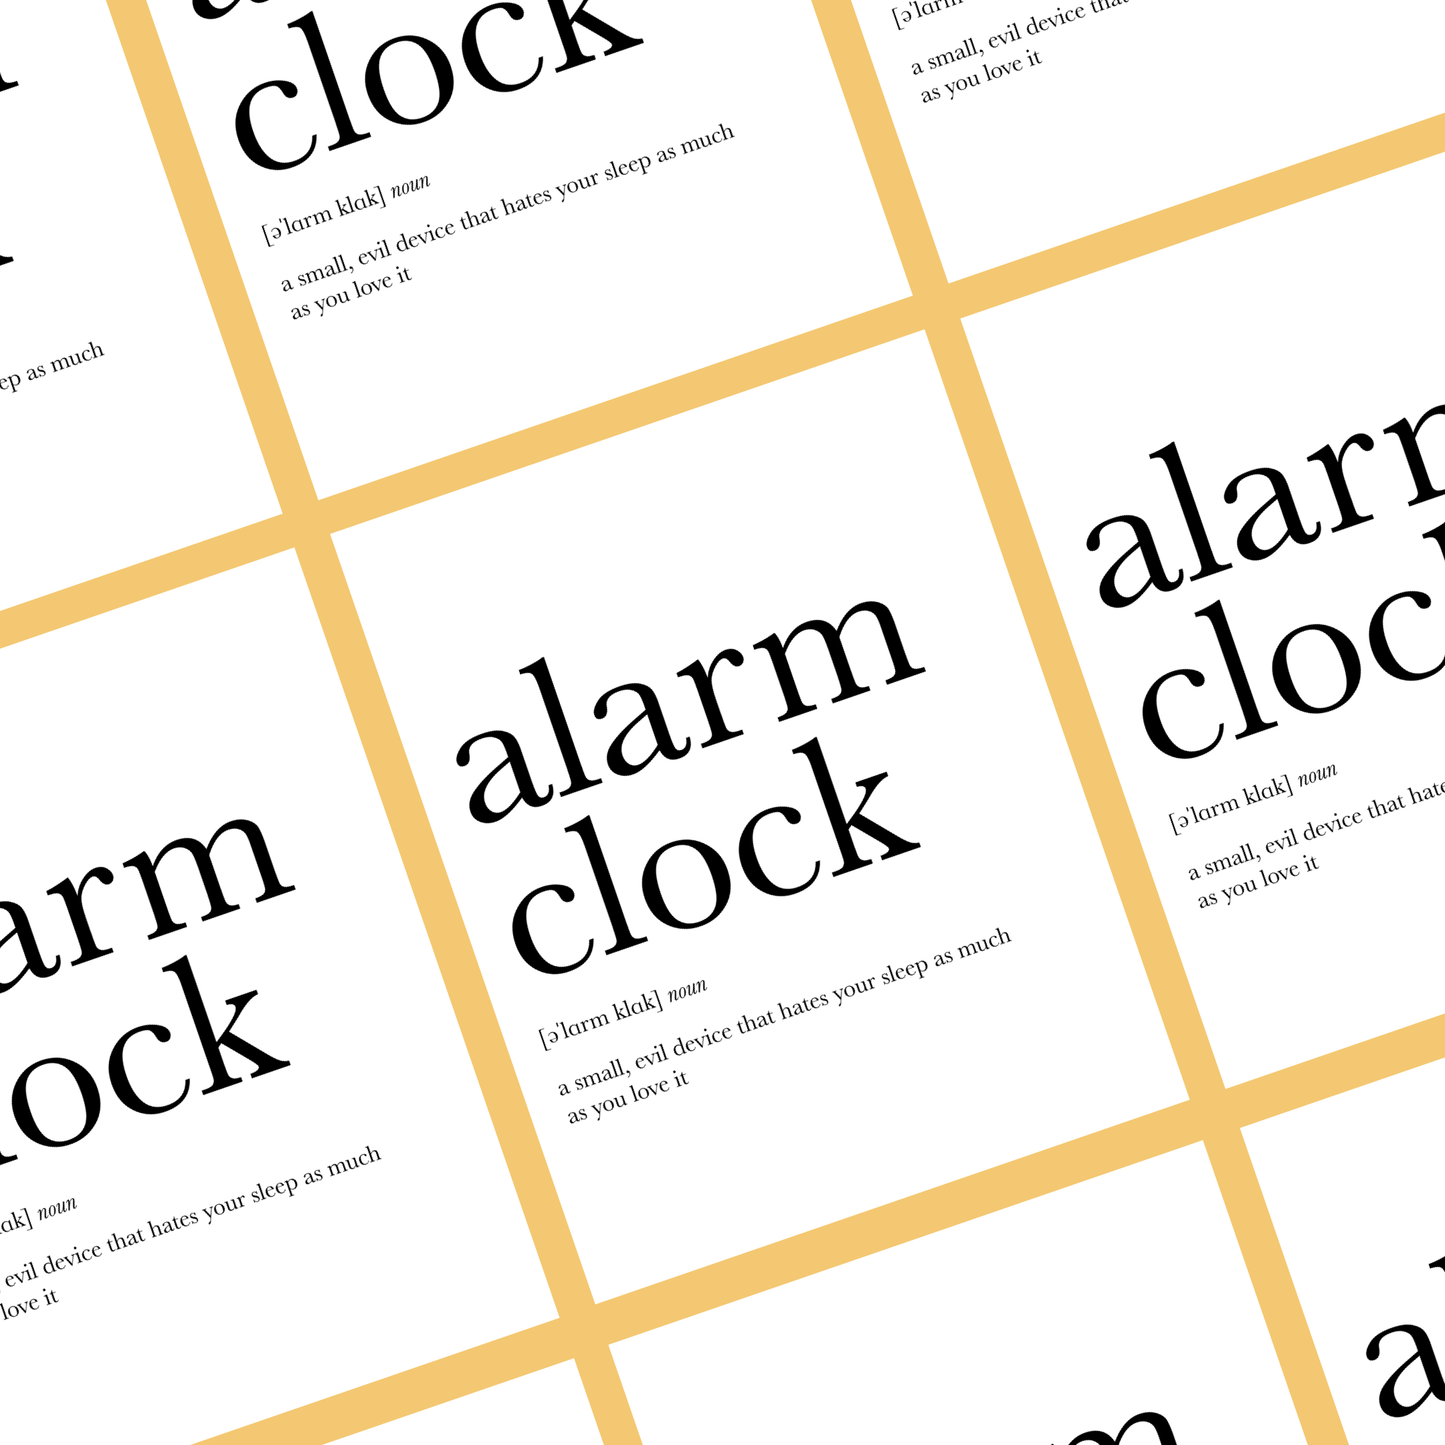 Alarm Clock Definition